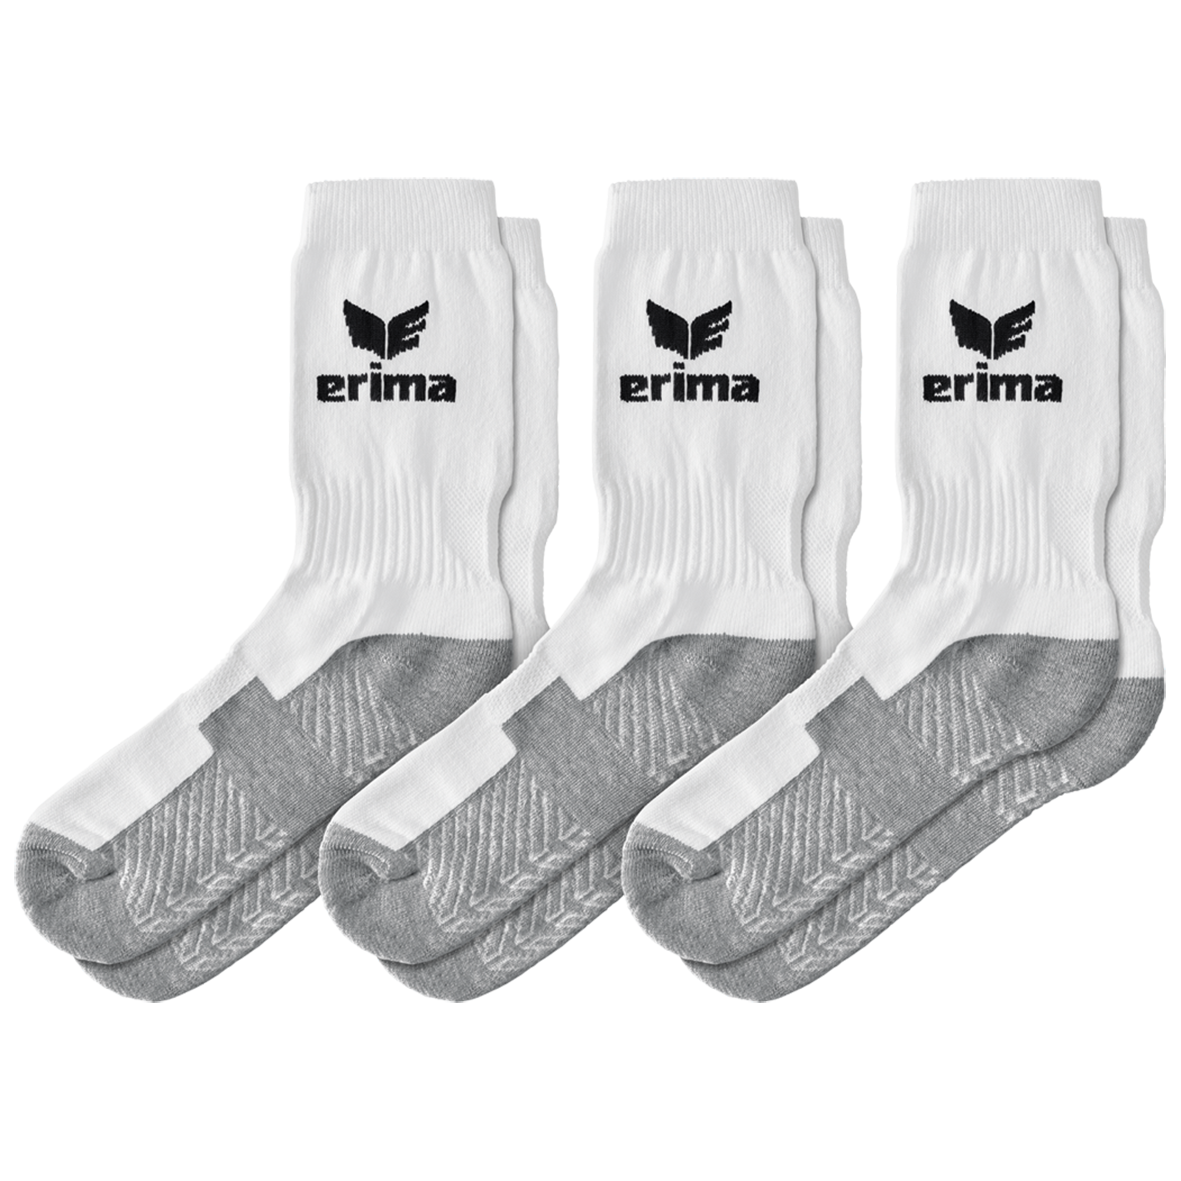 ERIMA SPORTS SOCKS, WHITE-BLACK (3 PAIRS).